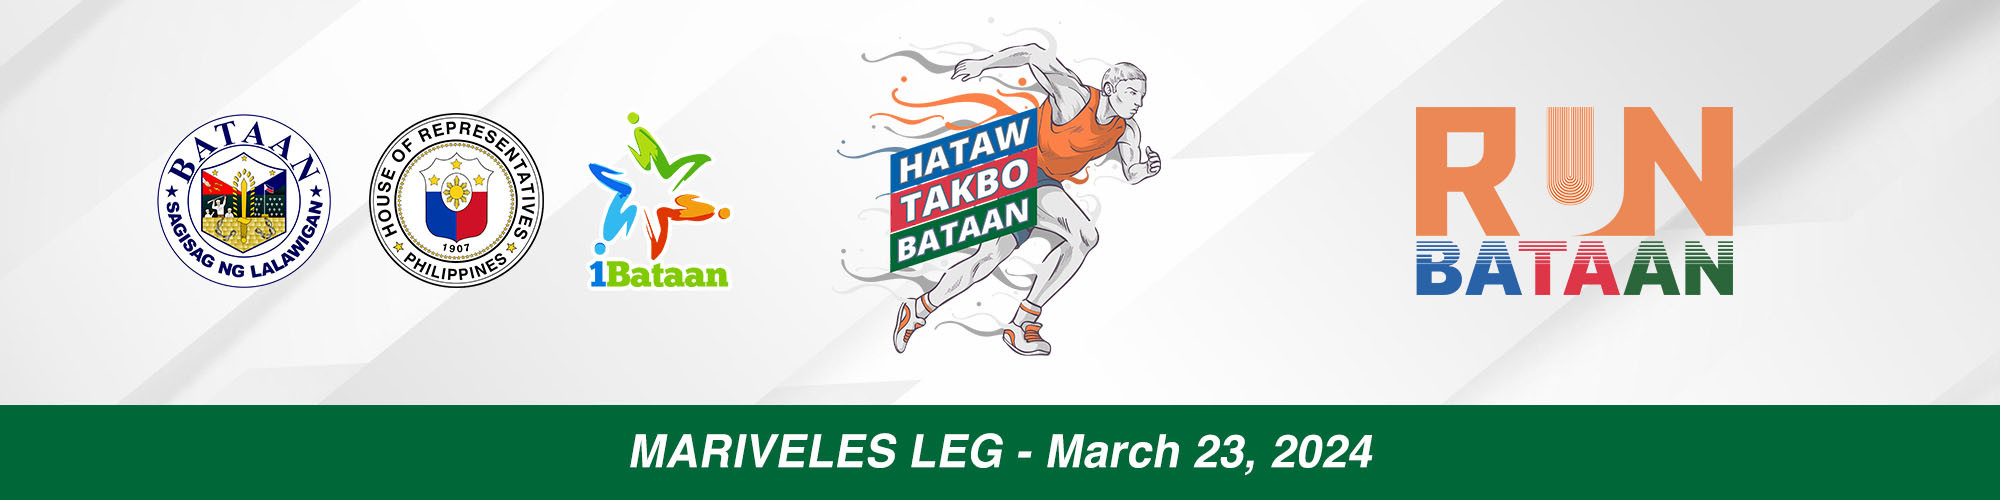 Hataw Takbo Bataan 2024 Mariveles Leg